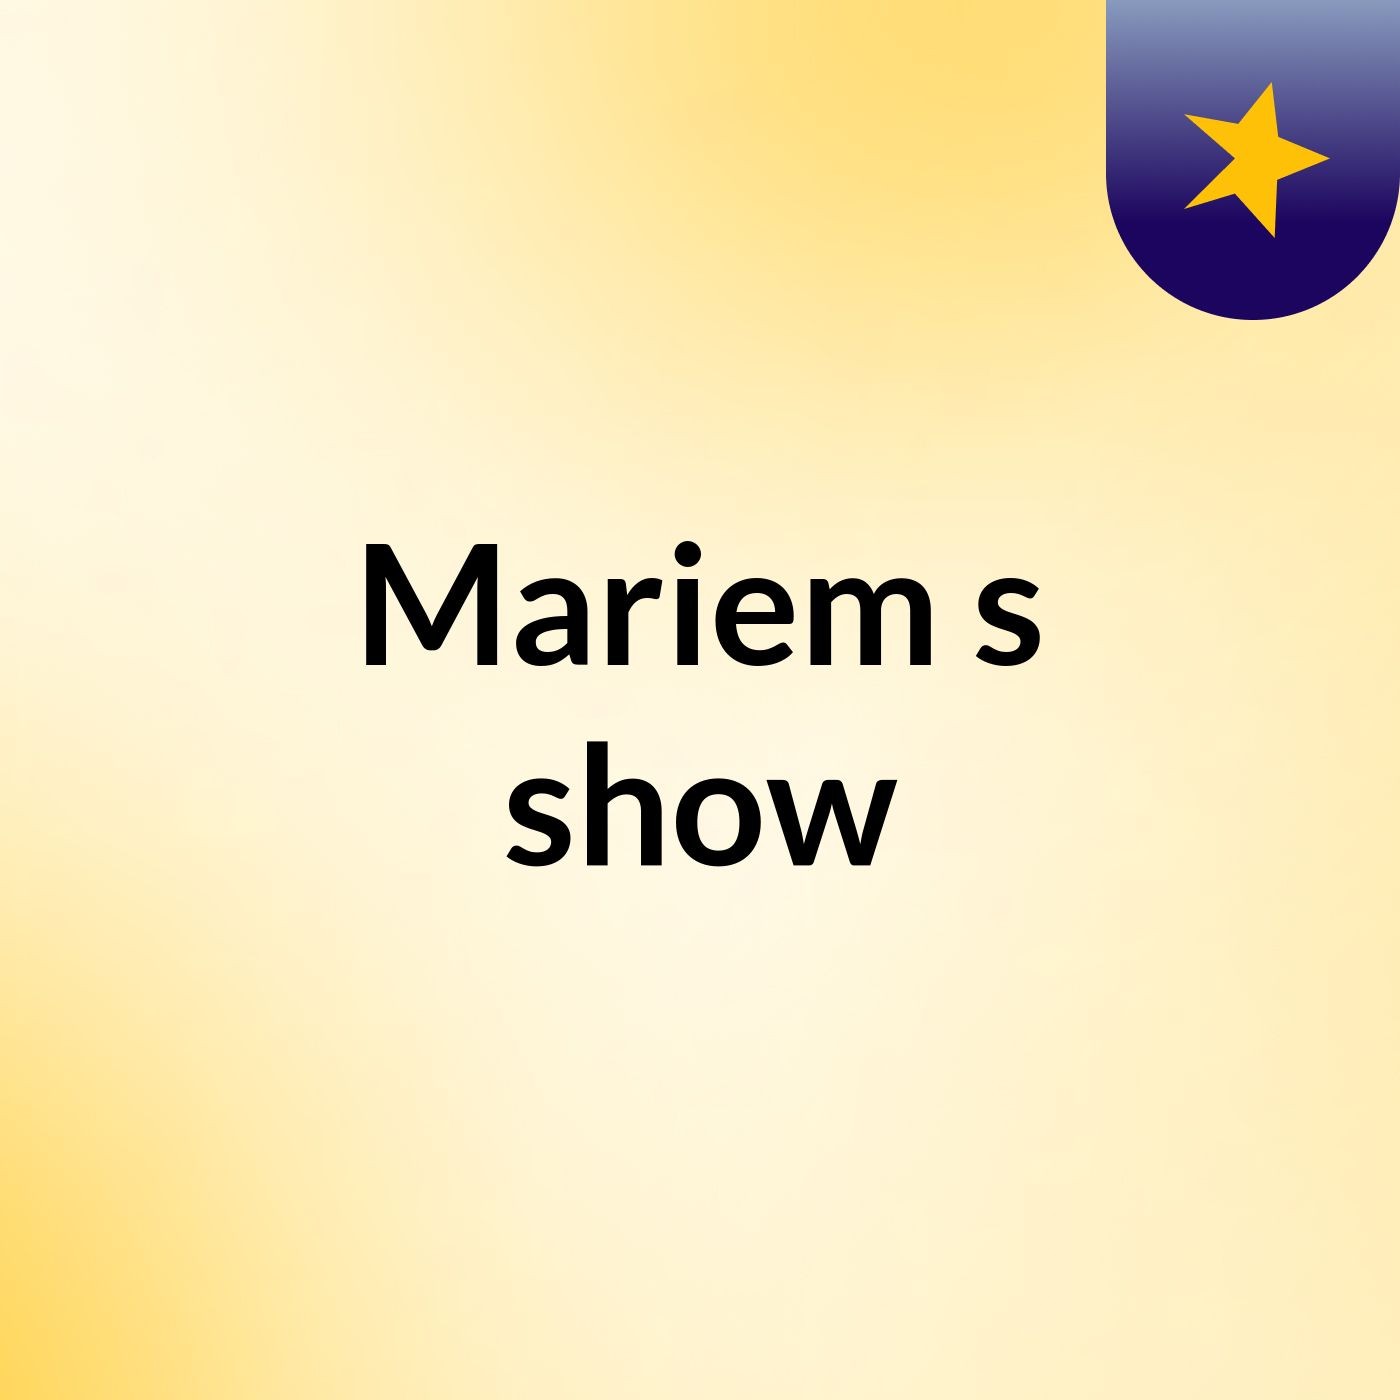 Mariem's show